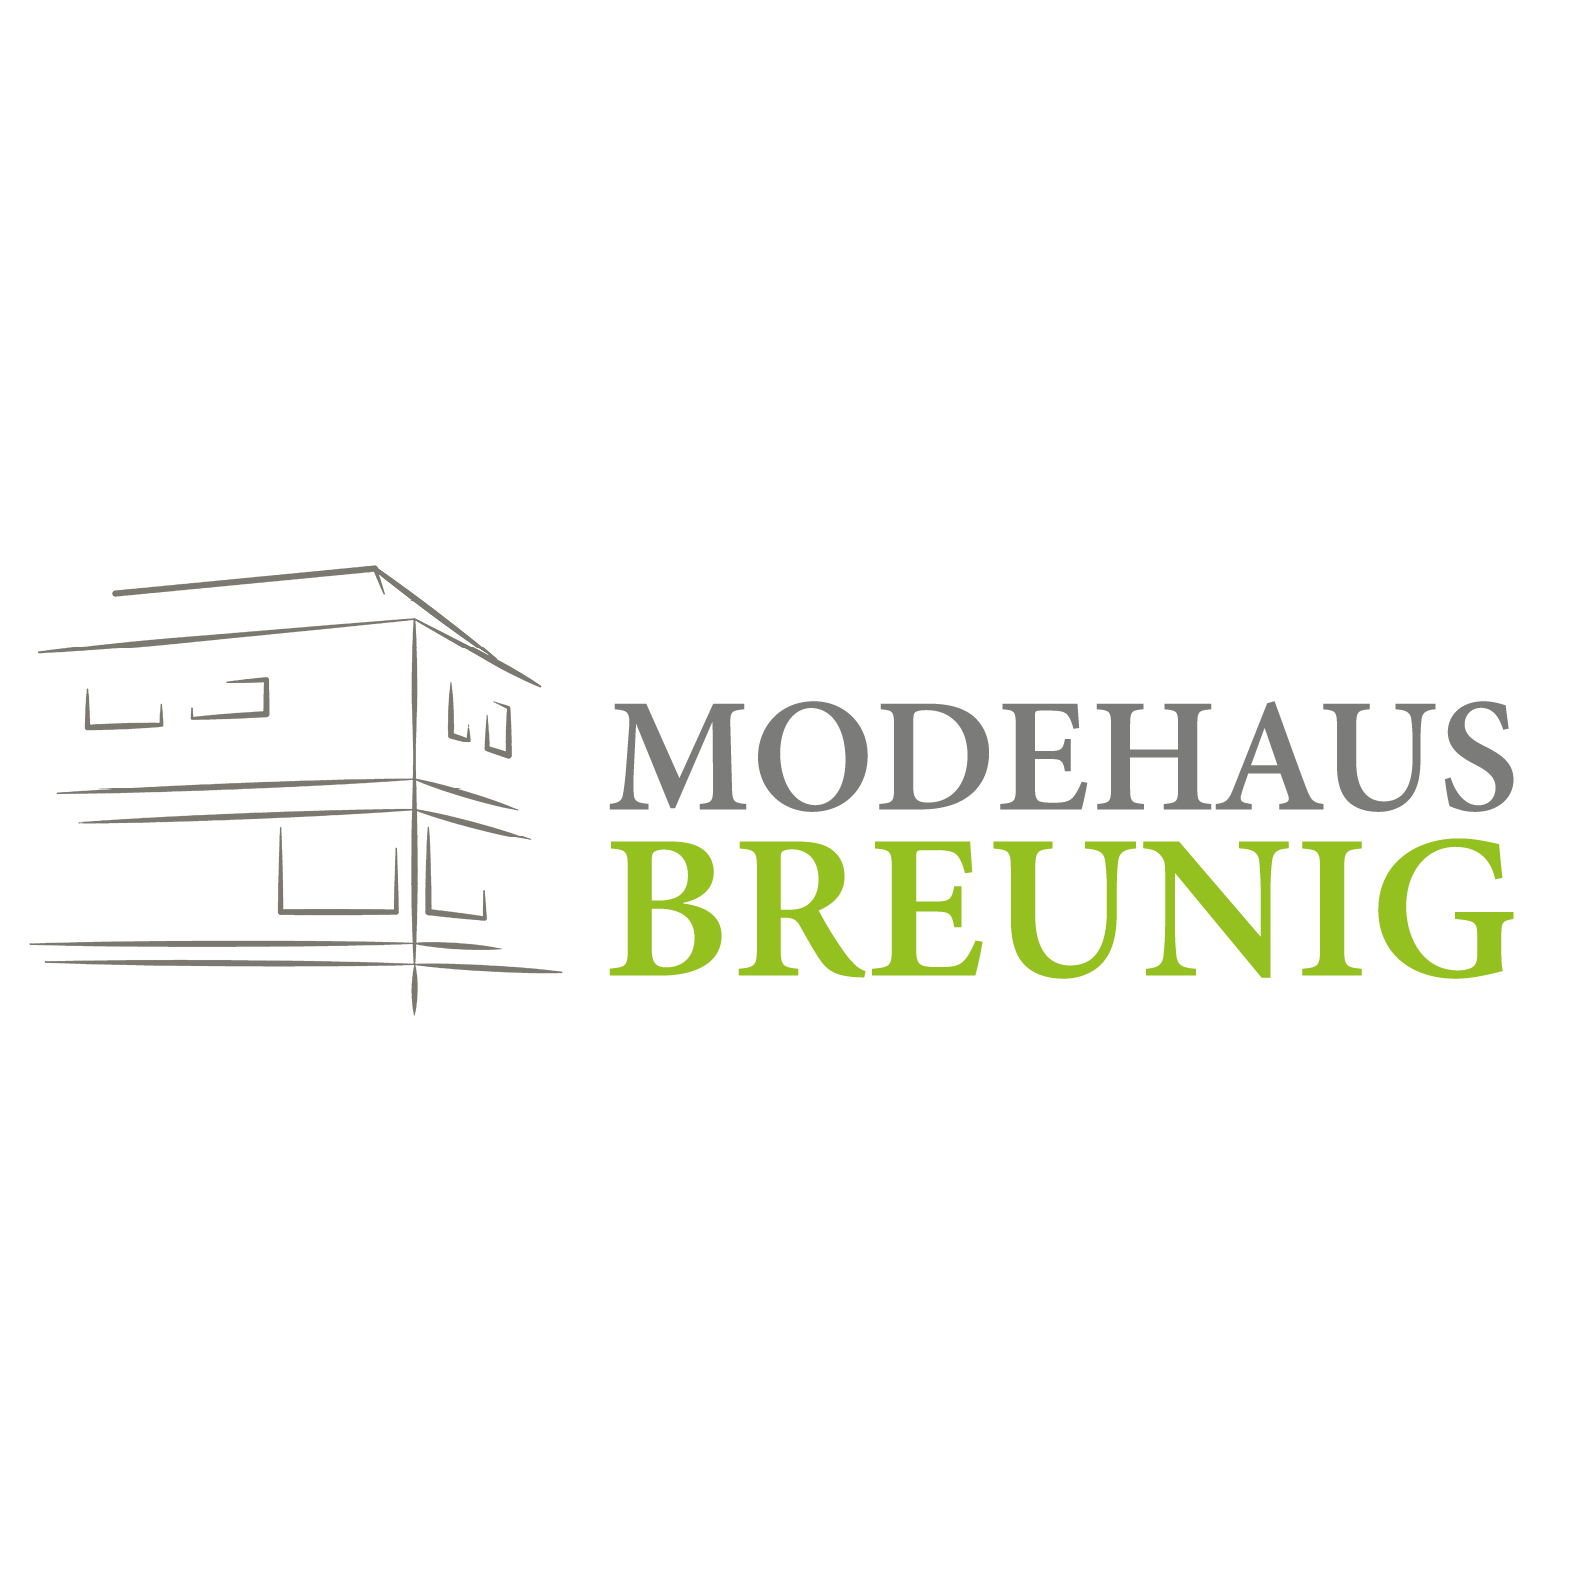 Modehaus Breunig in Klingenberg am Main - Logo